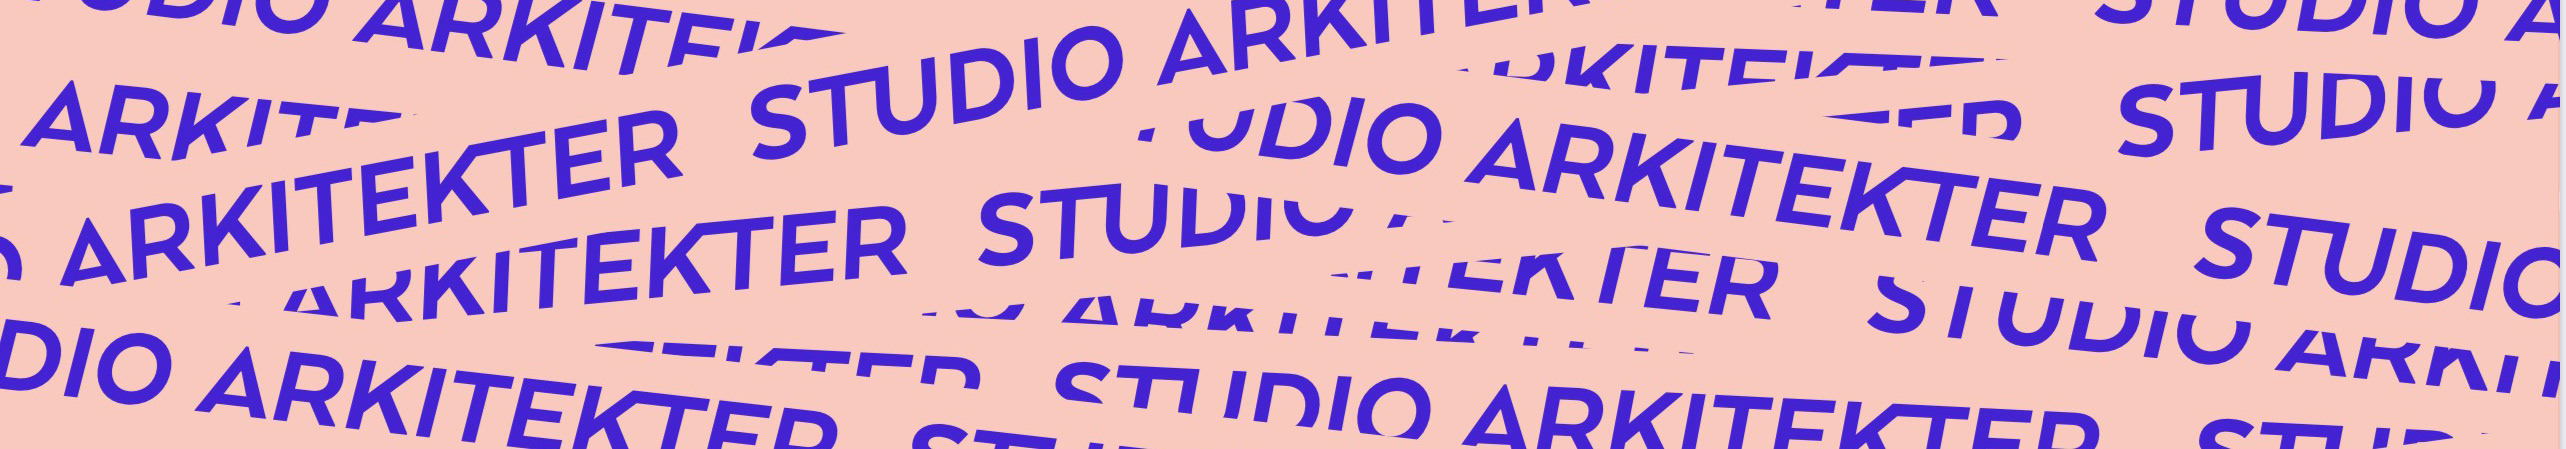 Studio Arkitekter's profile banner